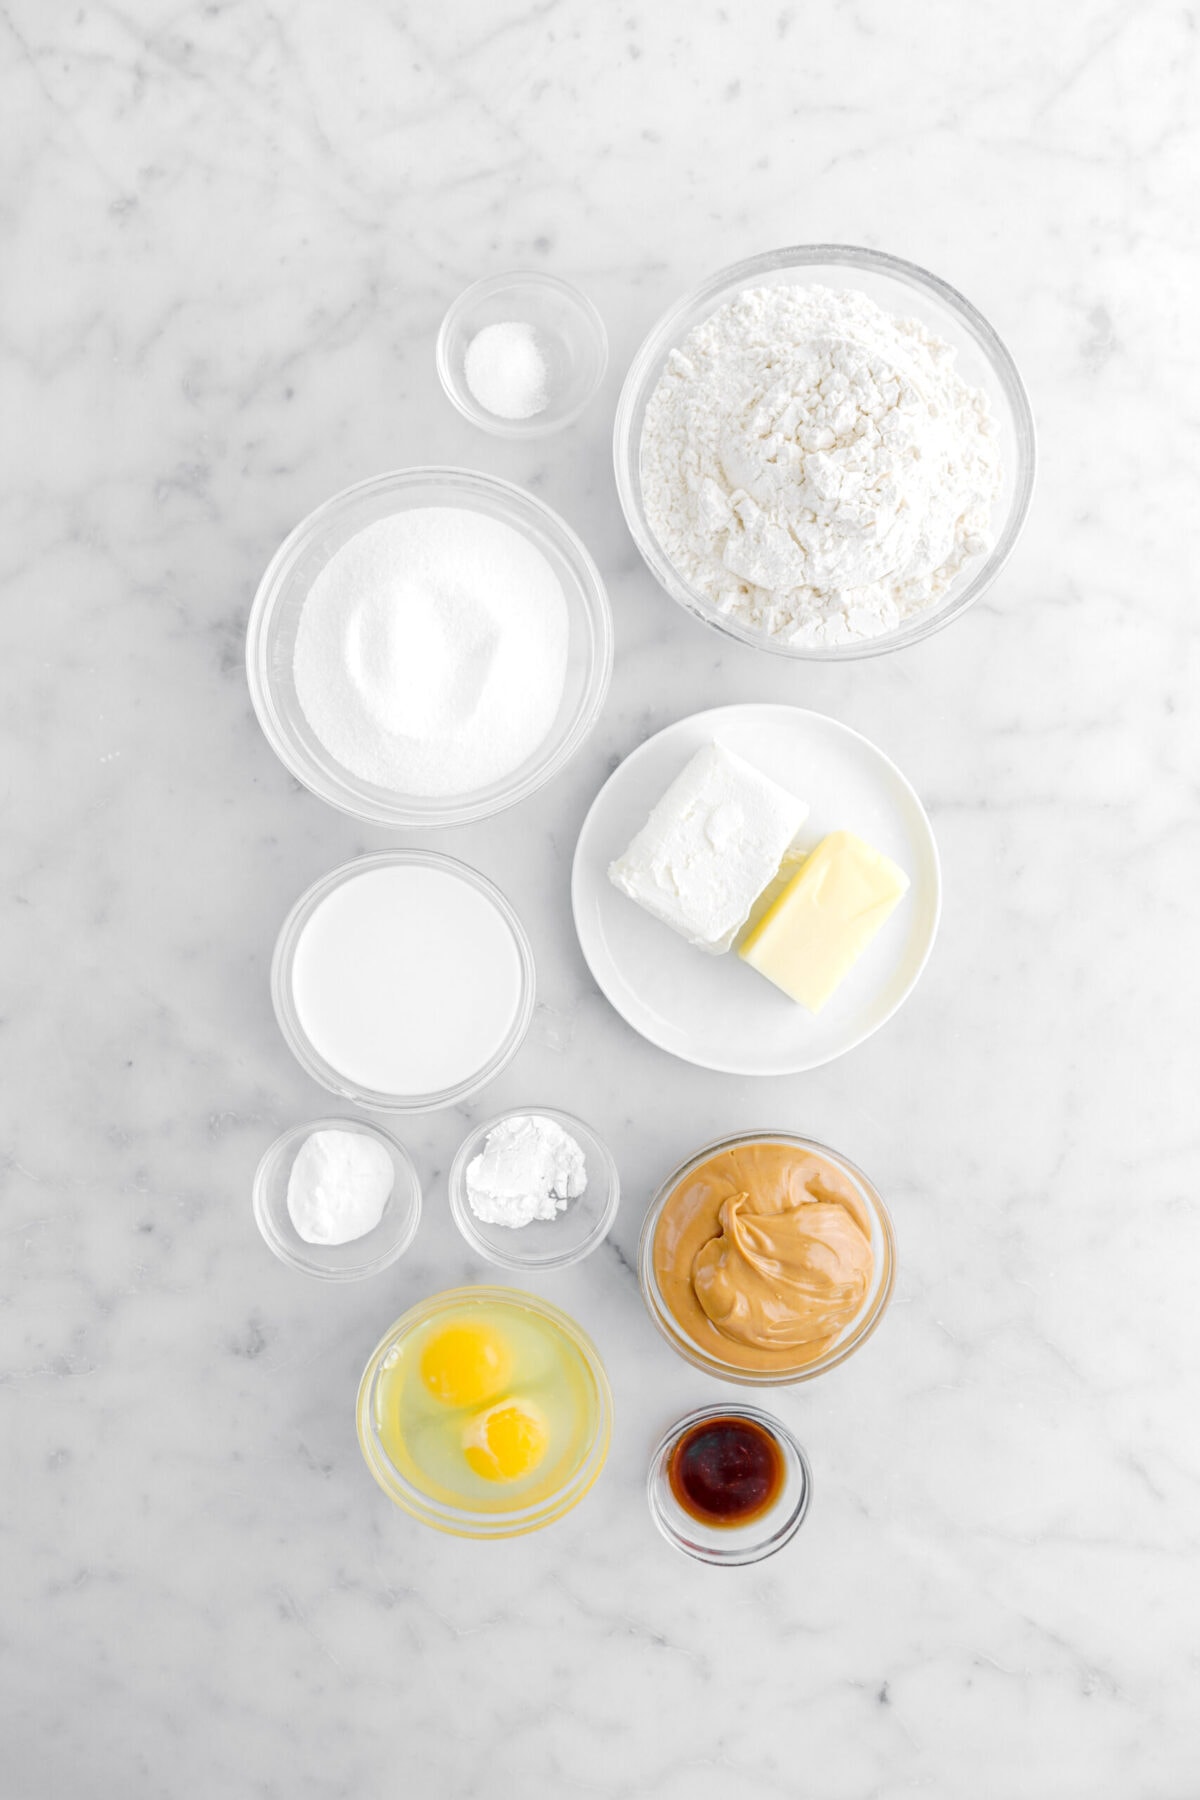 salt, flour, sugar, cream cheese, butter, milk, baking soda, baking powder, peanut butter, eggs, and vanilla on marble surface.